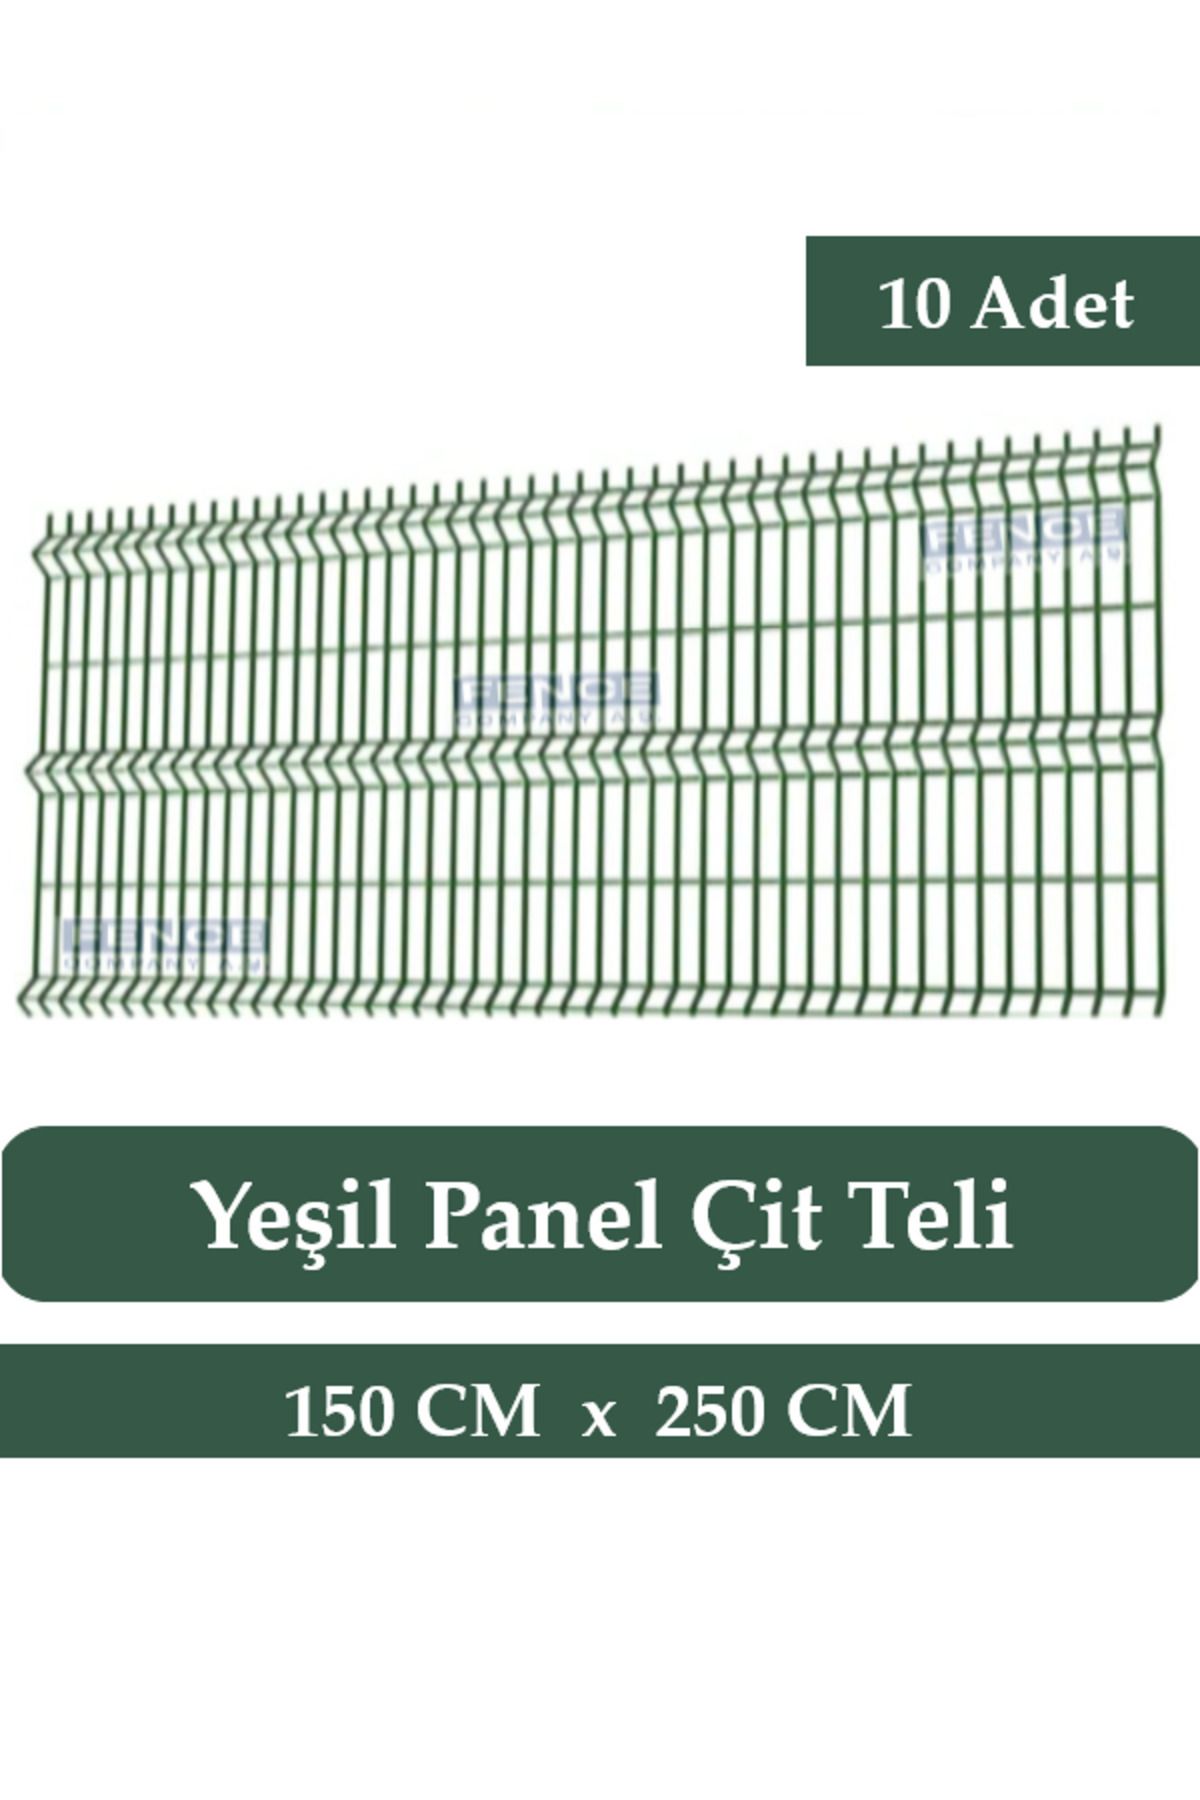 Fence Company 150 X 250 Cm Panel Çit Teli | Yeşil Bahçe Çiti | 10 Adet